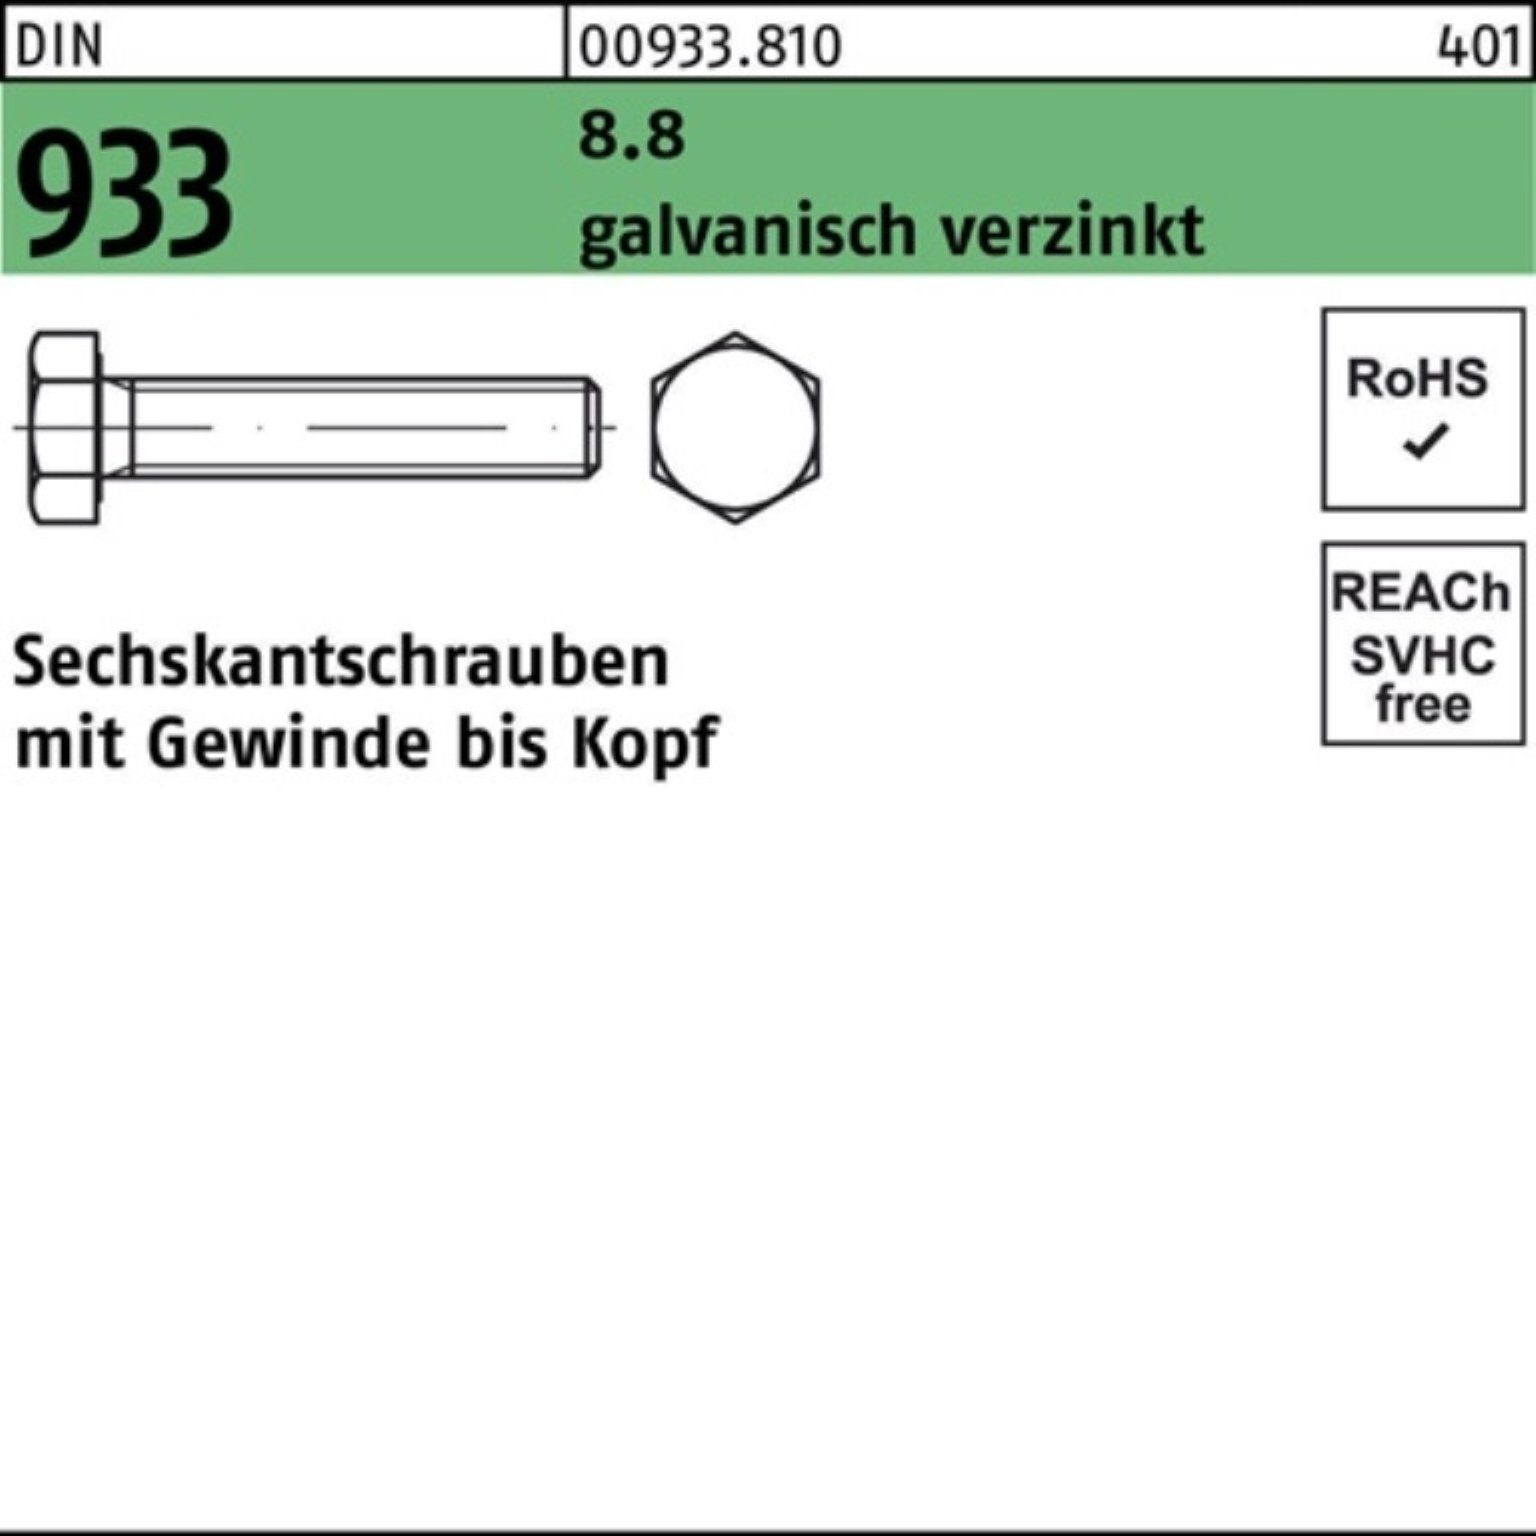 Reyher Sechskantschraube 100er Sechskantschraube 100 M10x galv.verz. 95 933 DIN St Pack VG 8.8